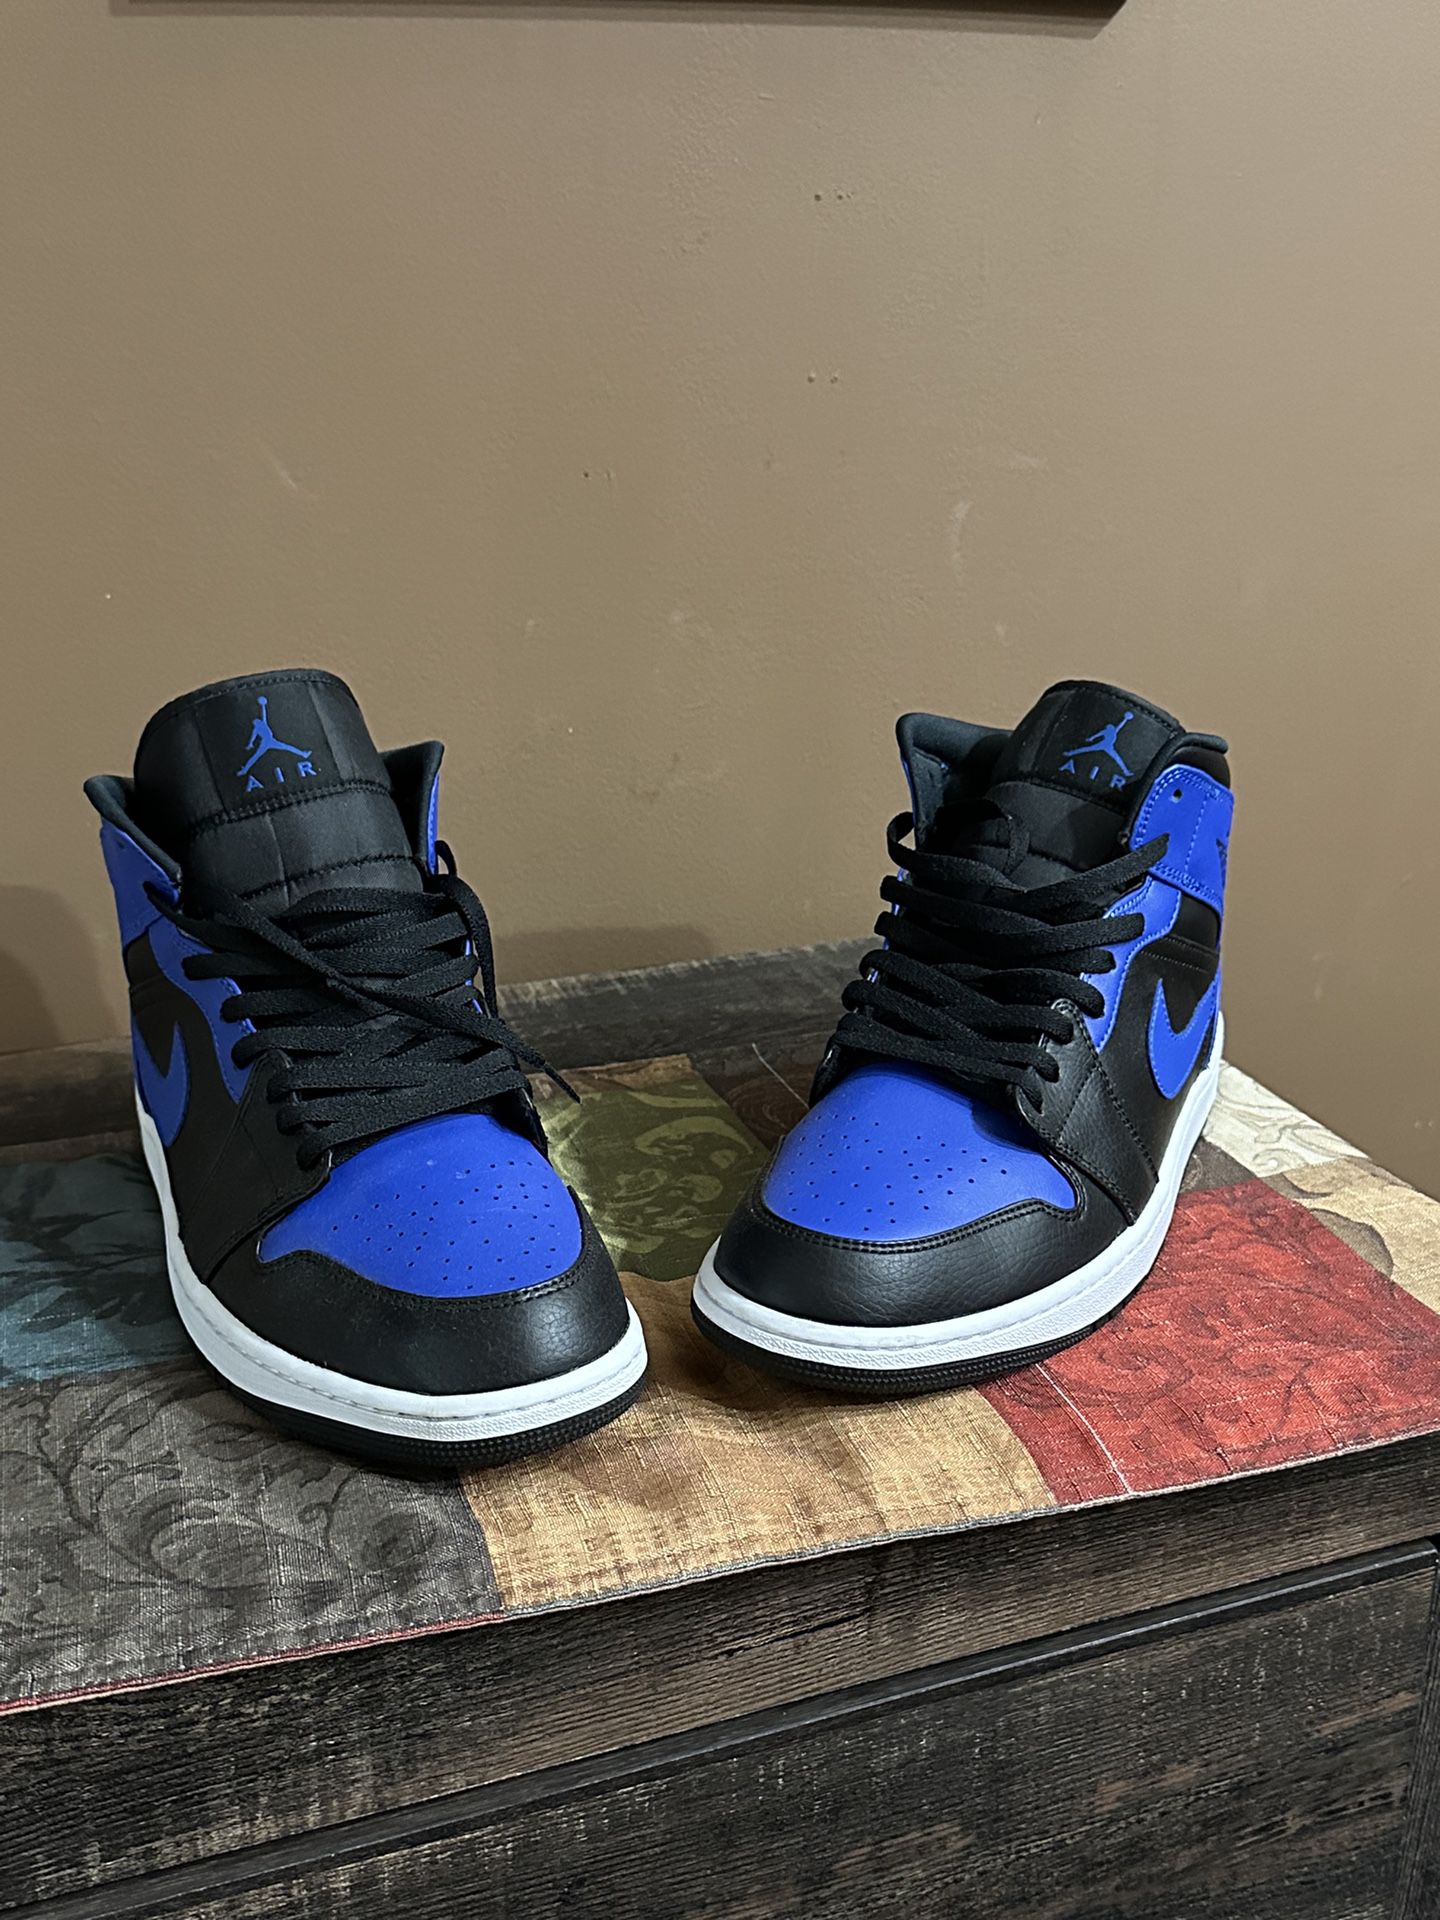 Jordan 1 Blue/Black Size 14